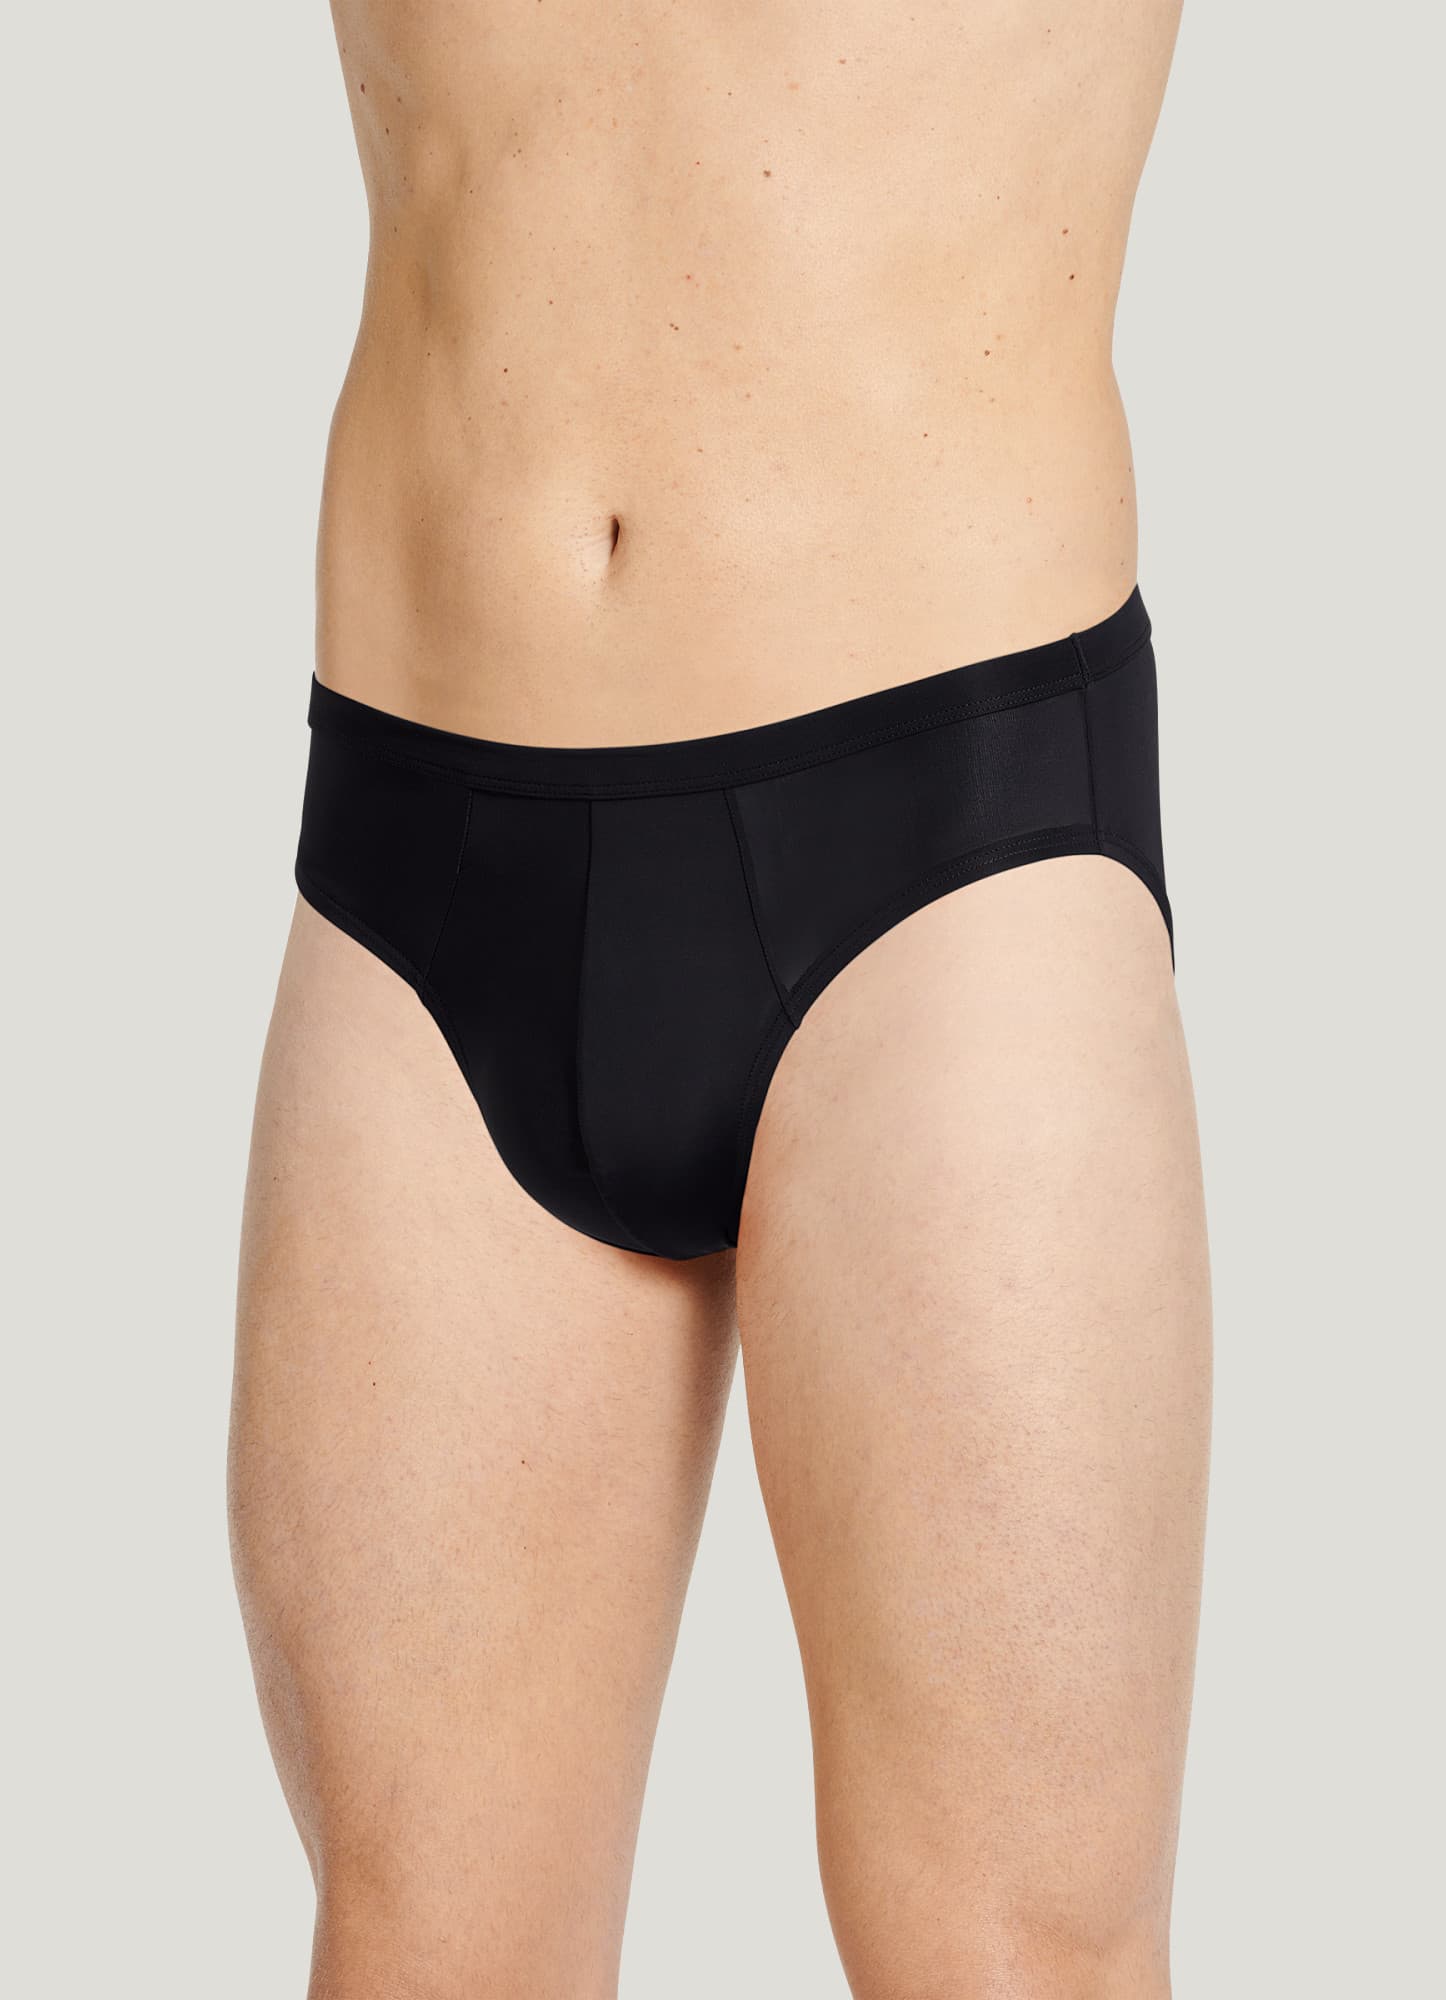 Jockey Elance(r) Bikini - 3 Pack (Black) Men's Underwear